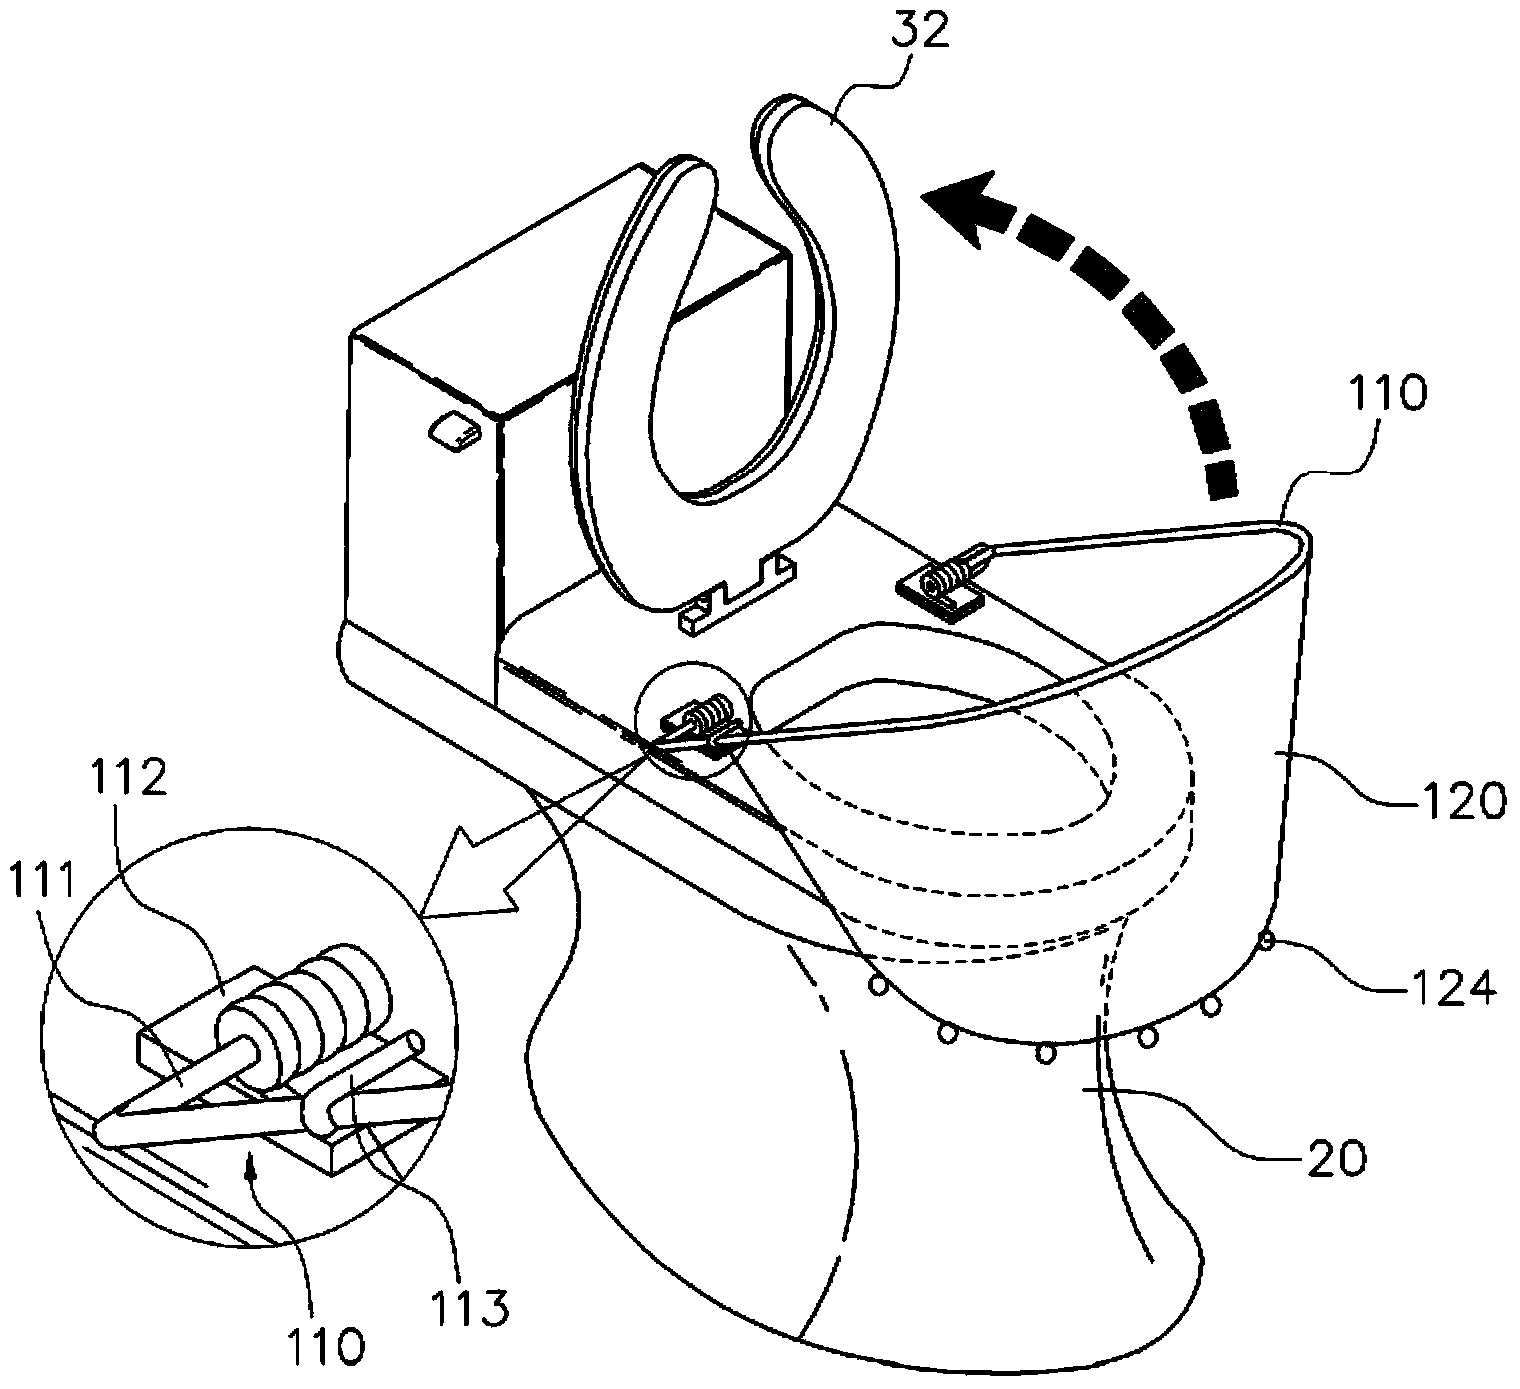 Toilet provided with urine splash prevention apparatus